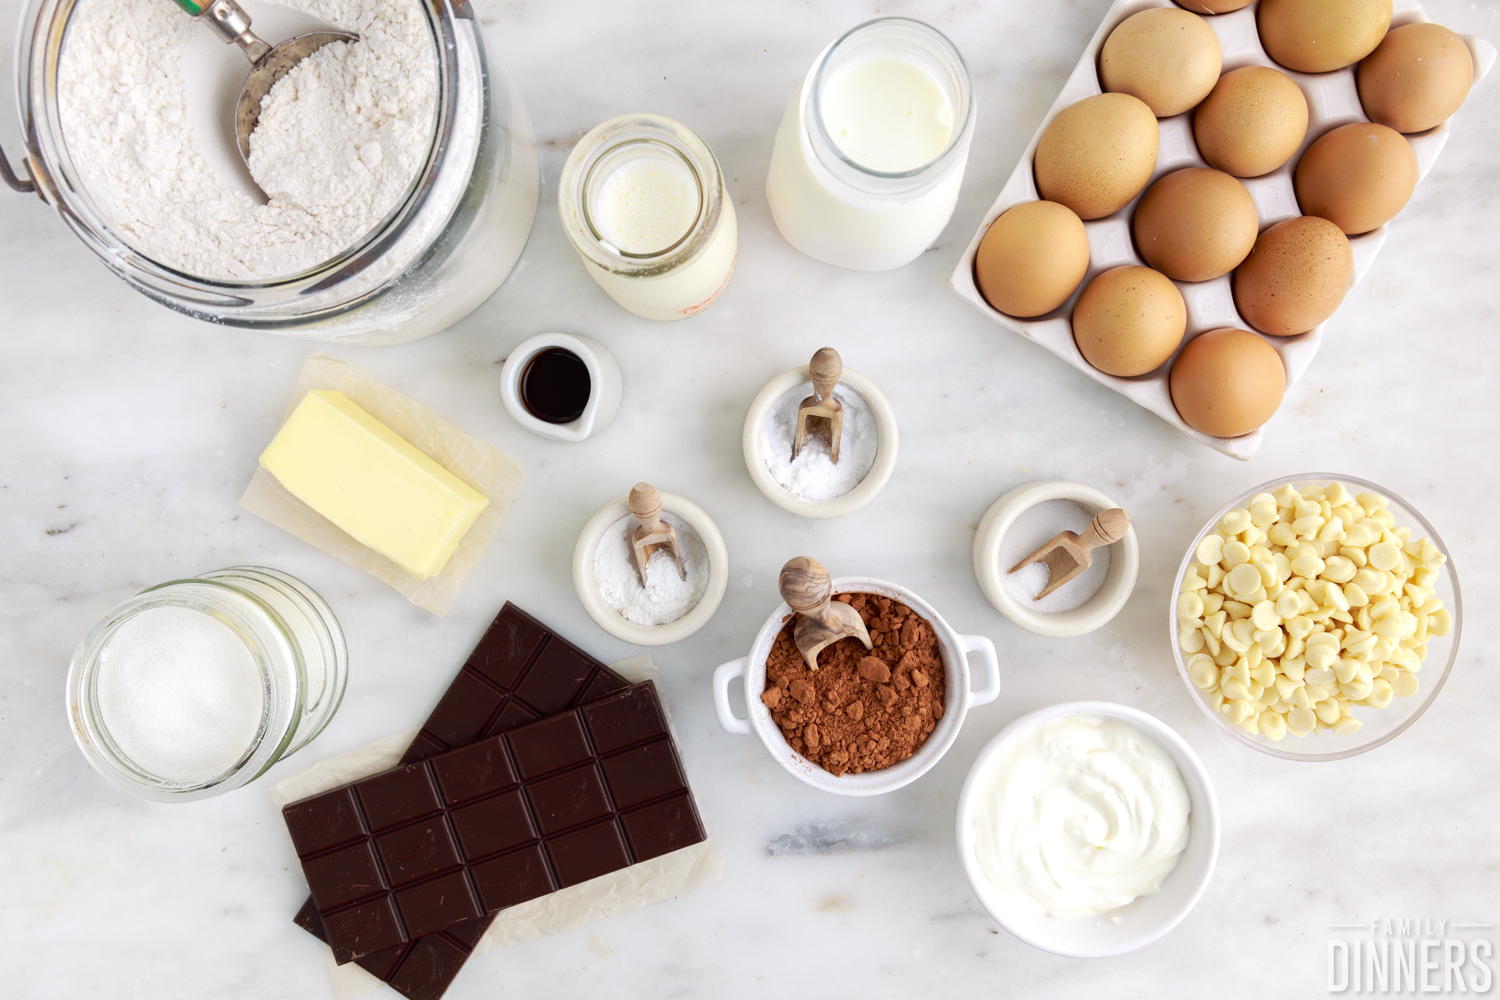 ingredients needed to make chocolate molten muffins